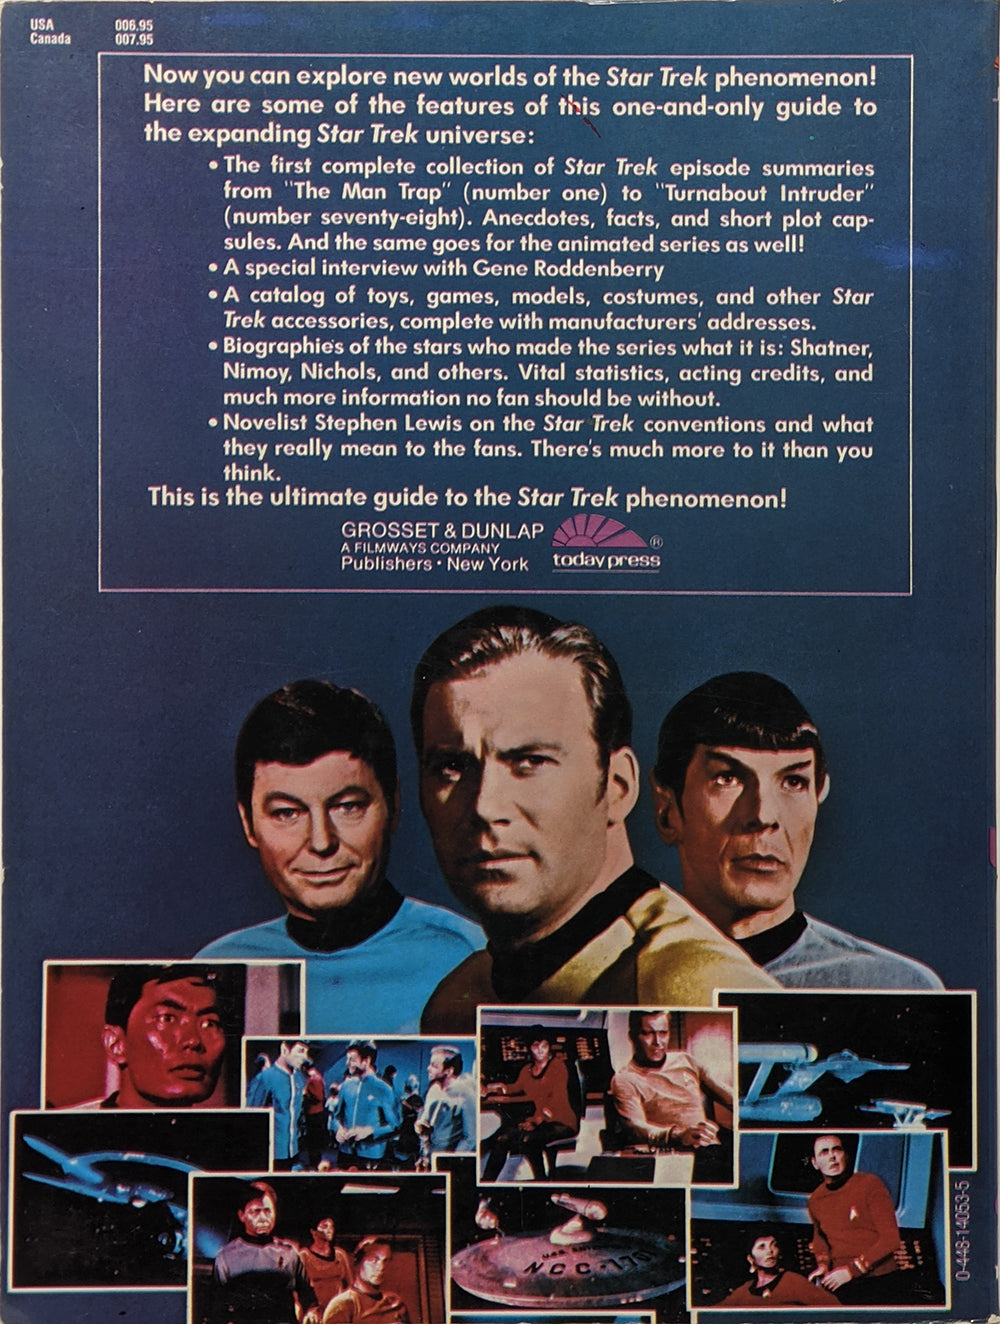 A Star Trek Catalog signed by William Shatner JSA COA Certified Autograph